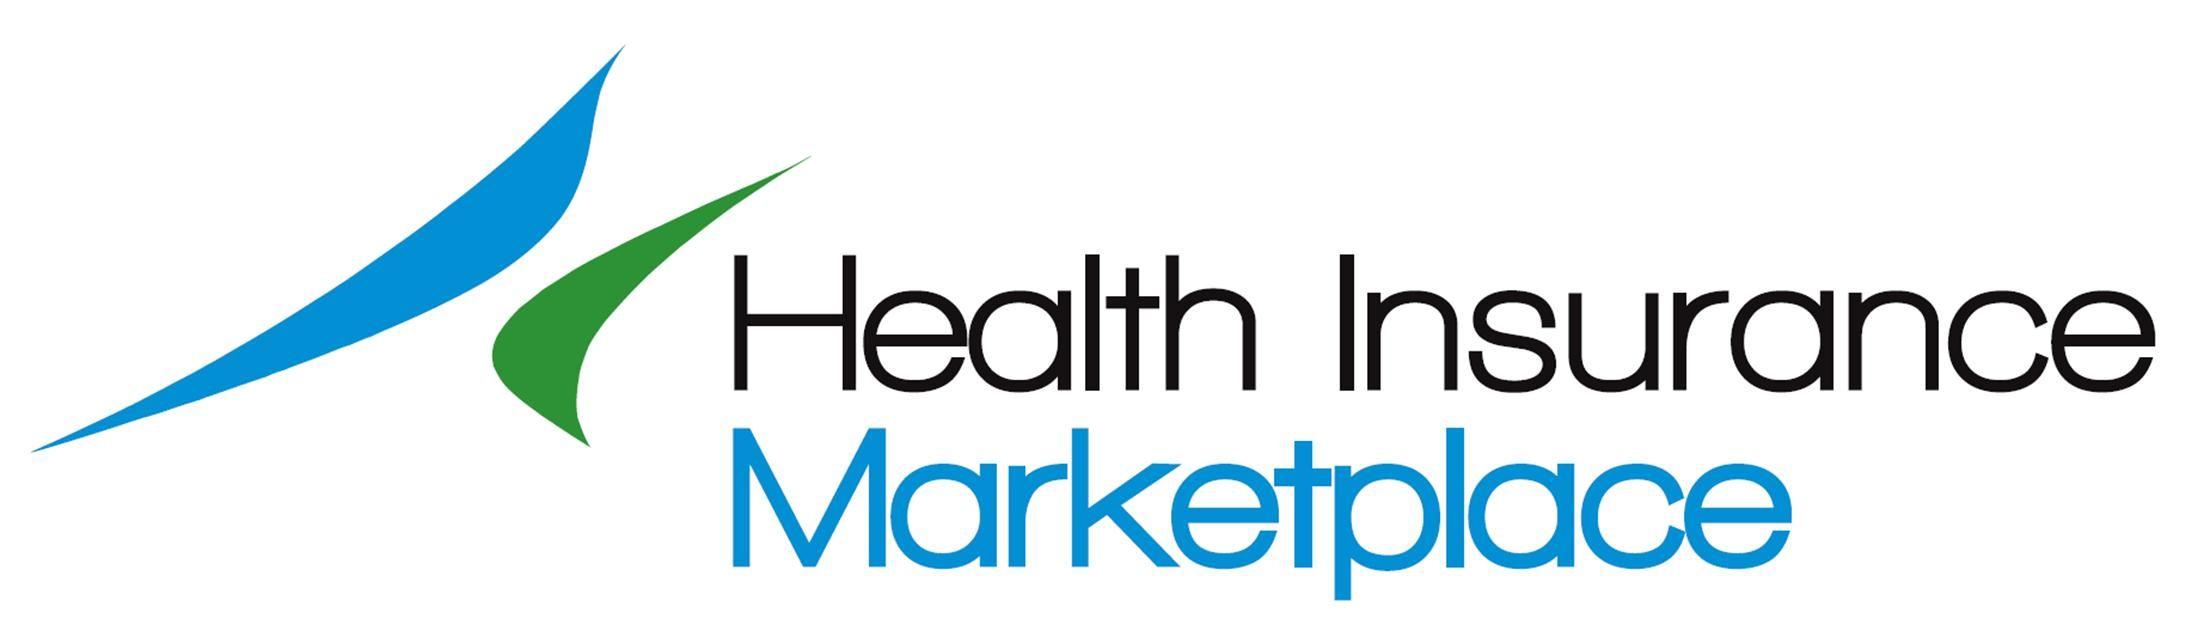 Health Insurance Logo - Health Insurance Marketplace stacked logo - RiverStone Health